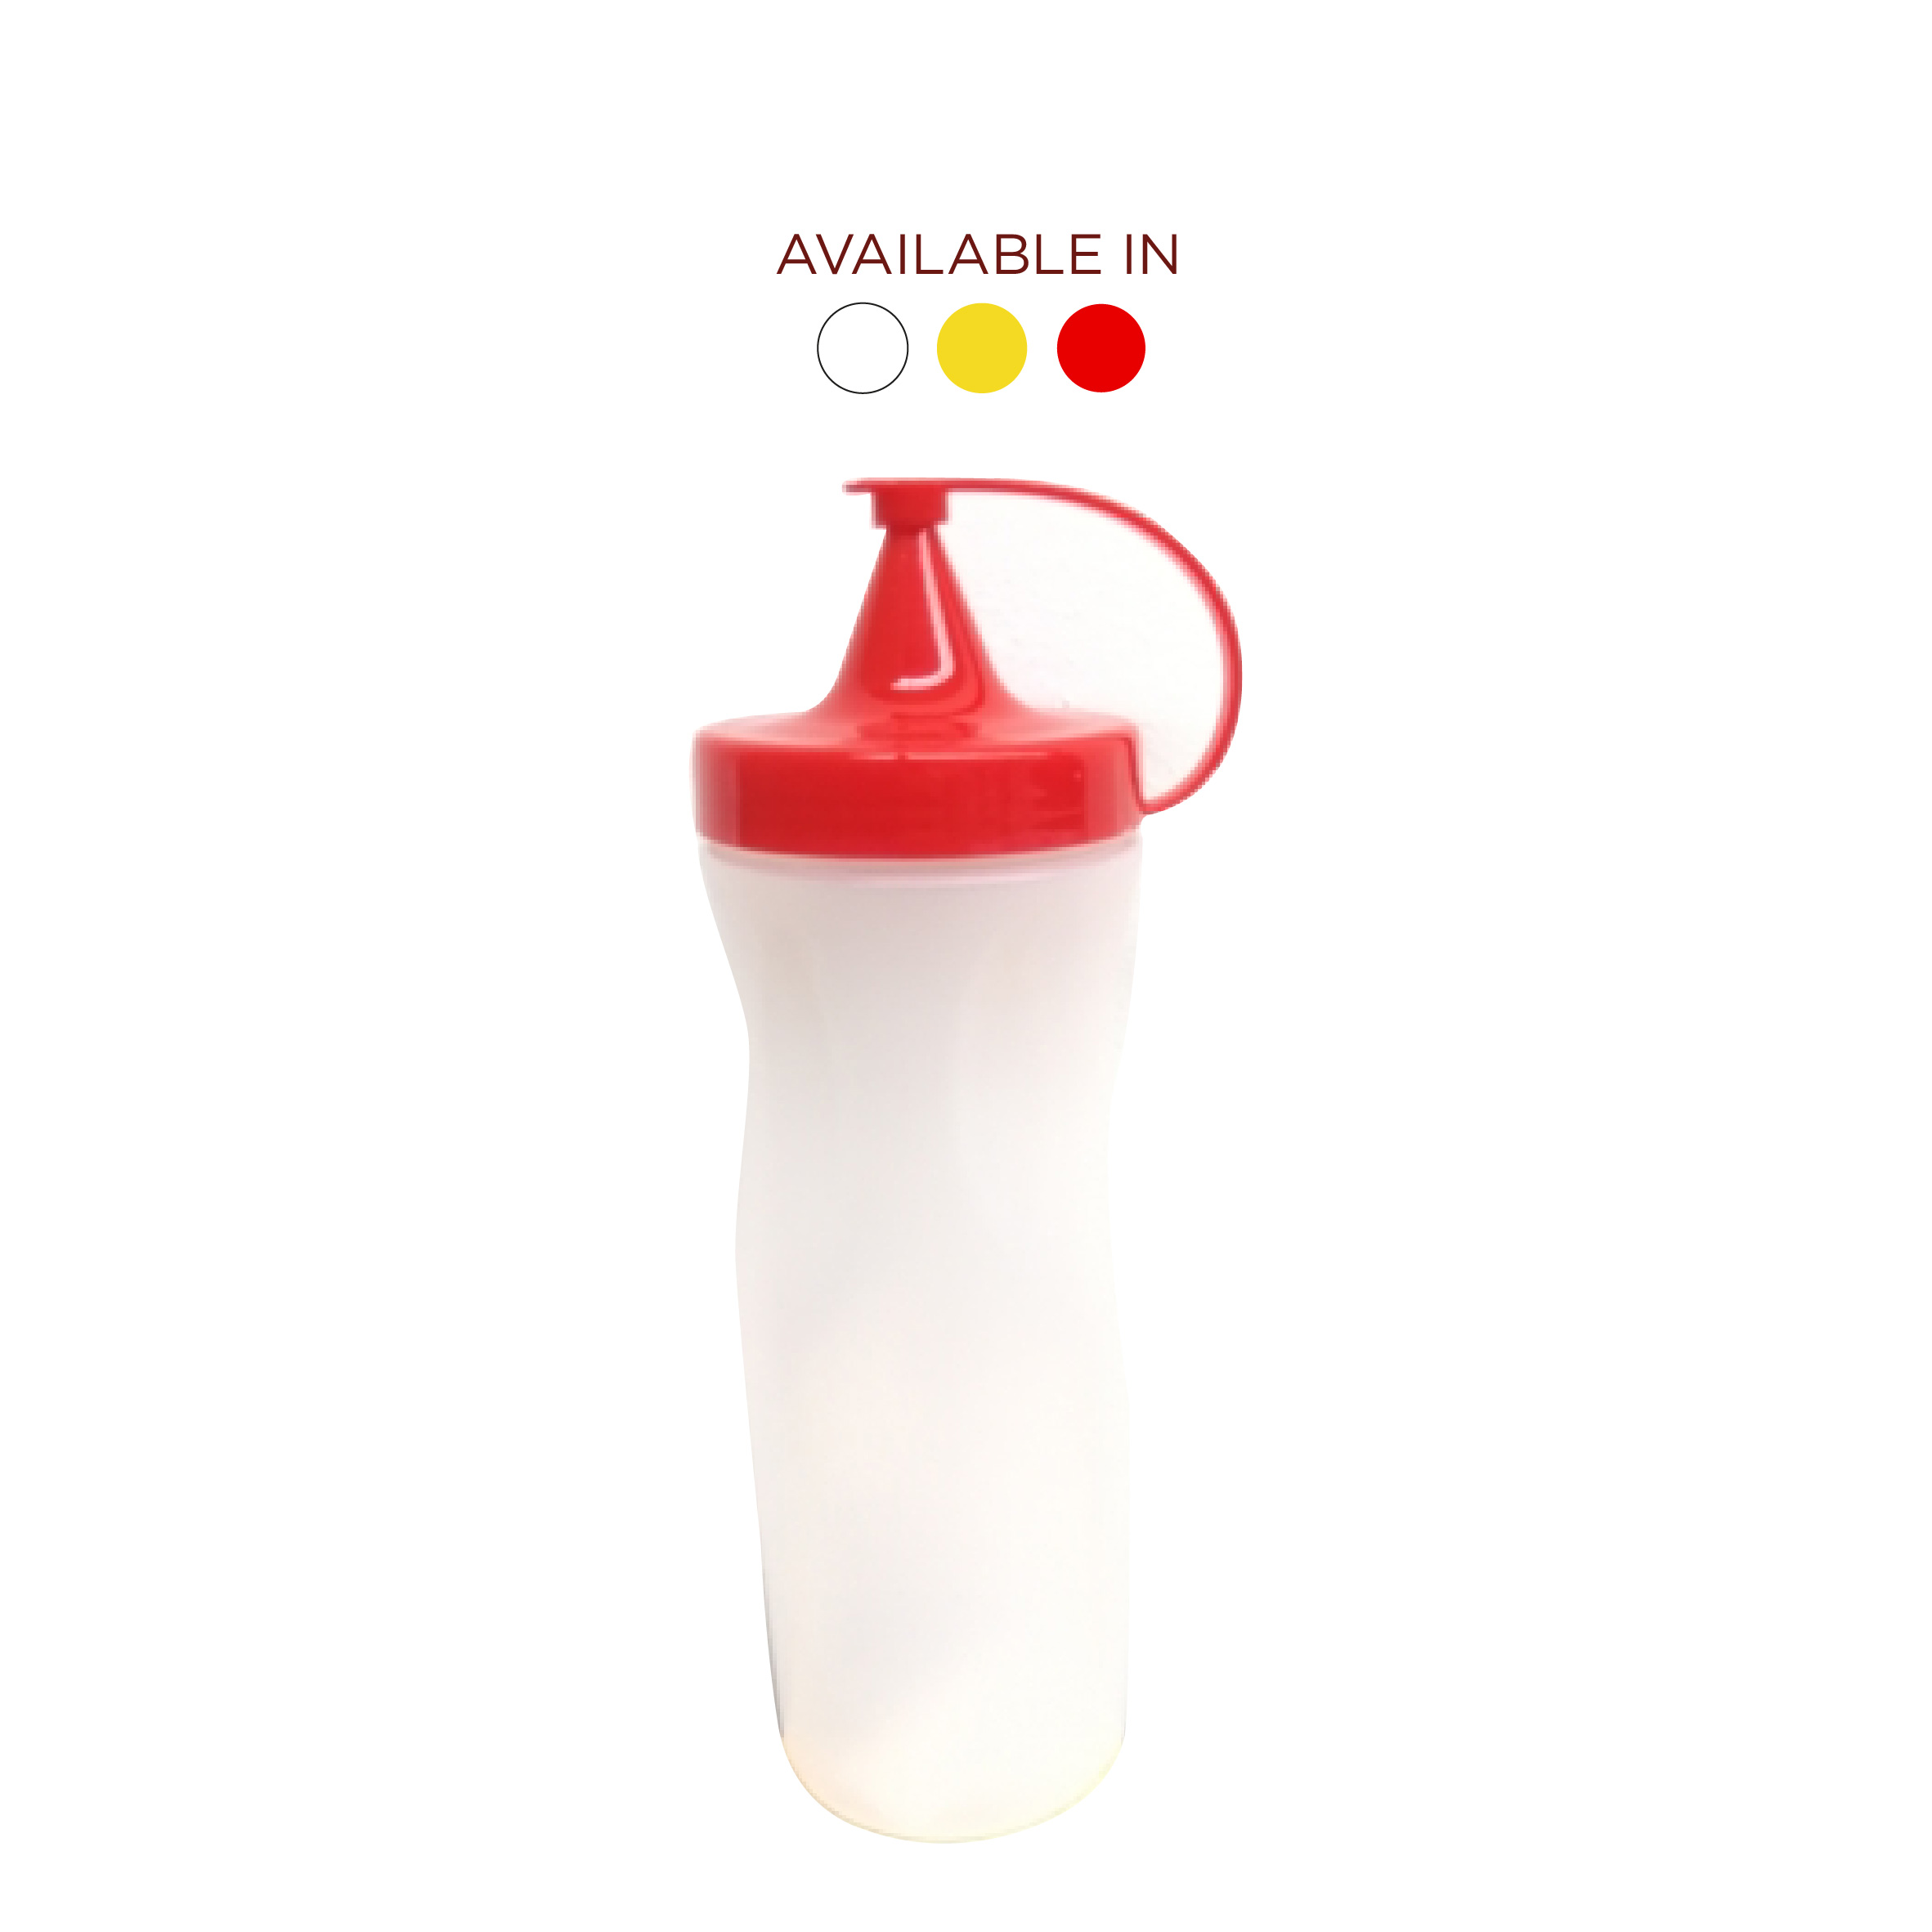 Sunplast Sauce Bottle 700ML (Available in White / Yellow / Red), SC-403